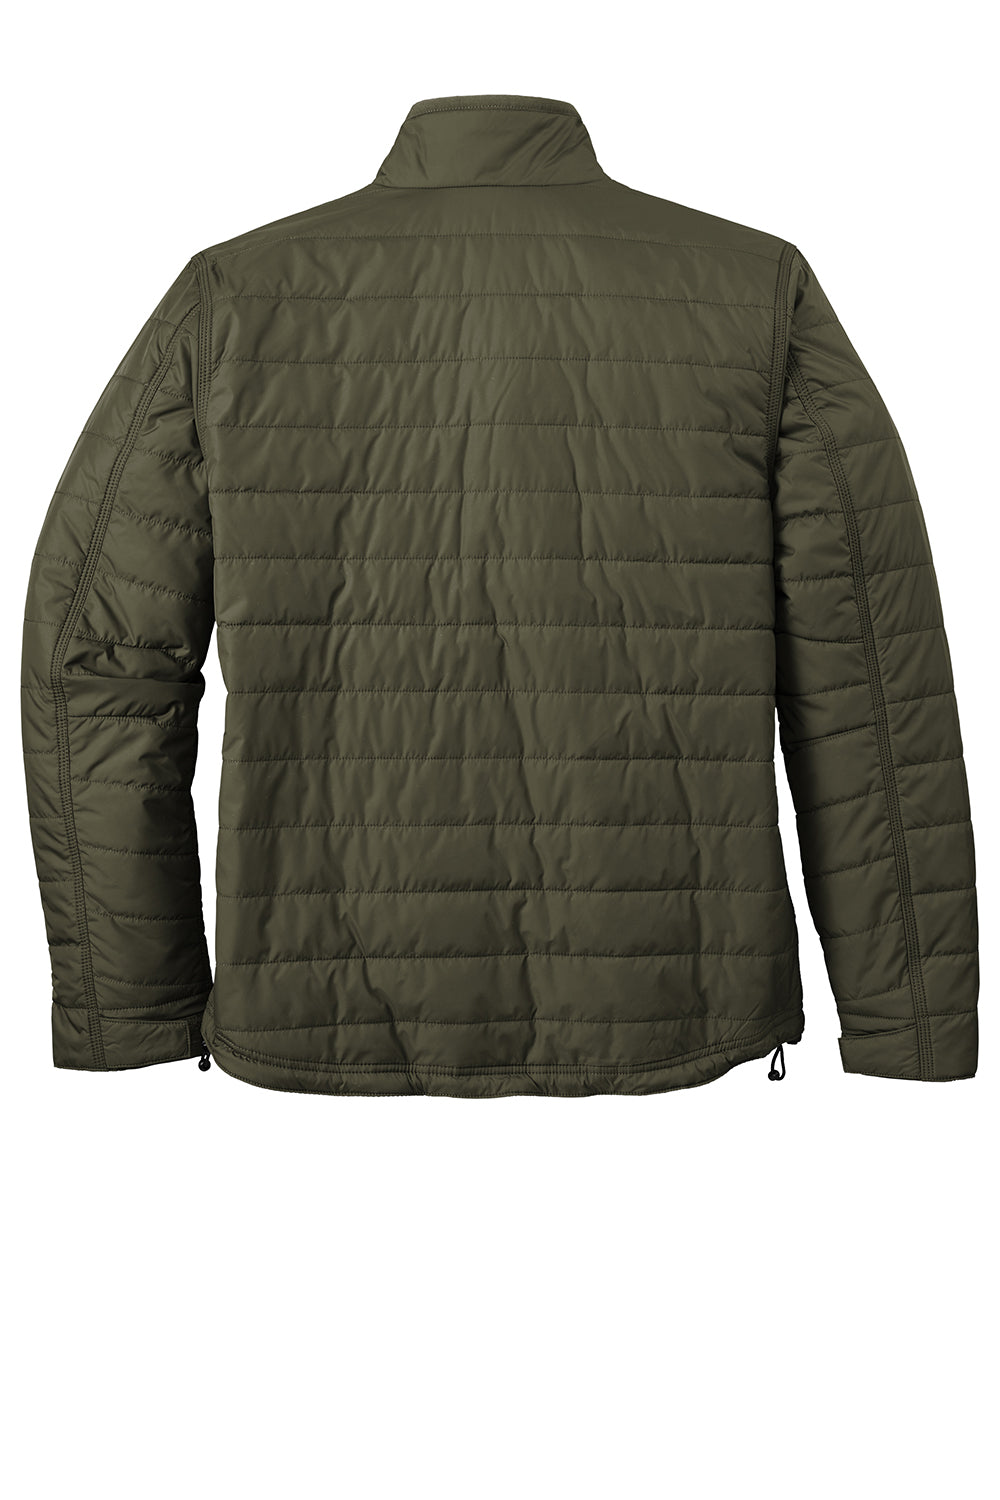 Carhartt CT102208 Mens Gilliam Wind & Water Resistant Full Zip Jacket Moss Green Flat Back